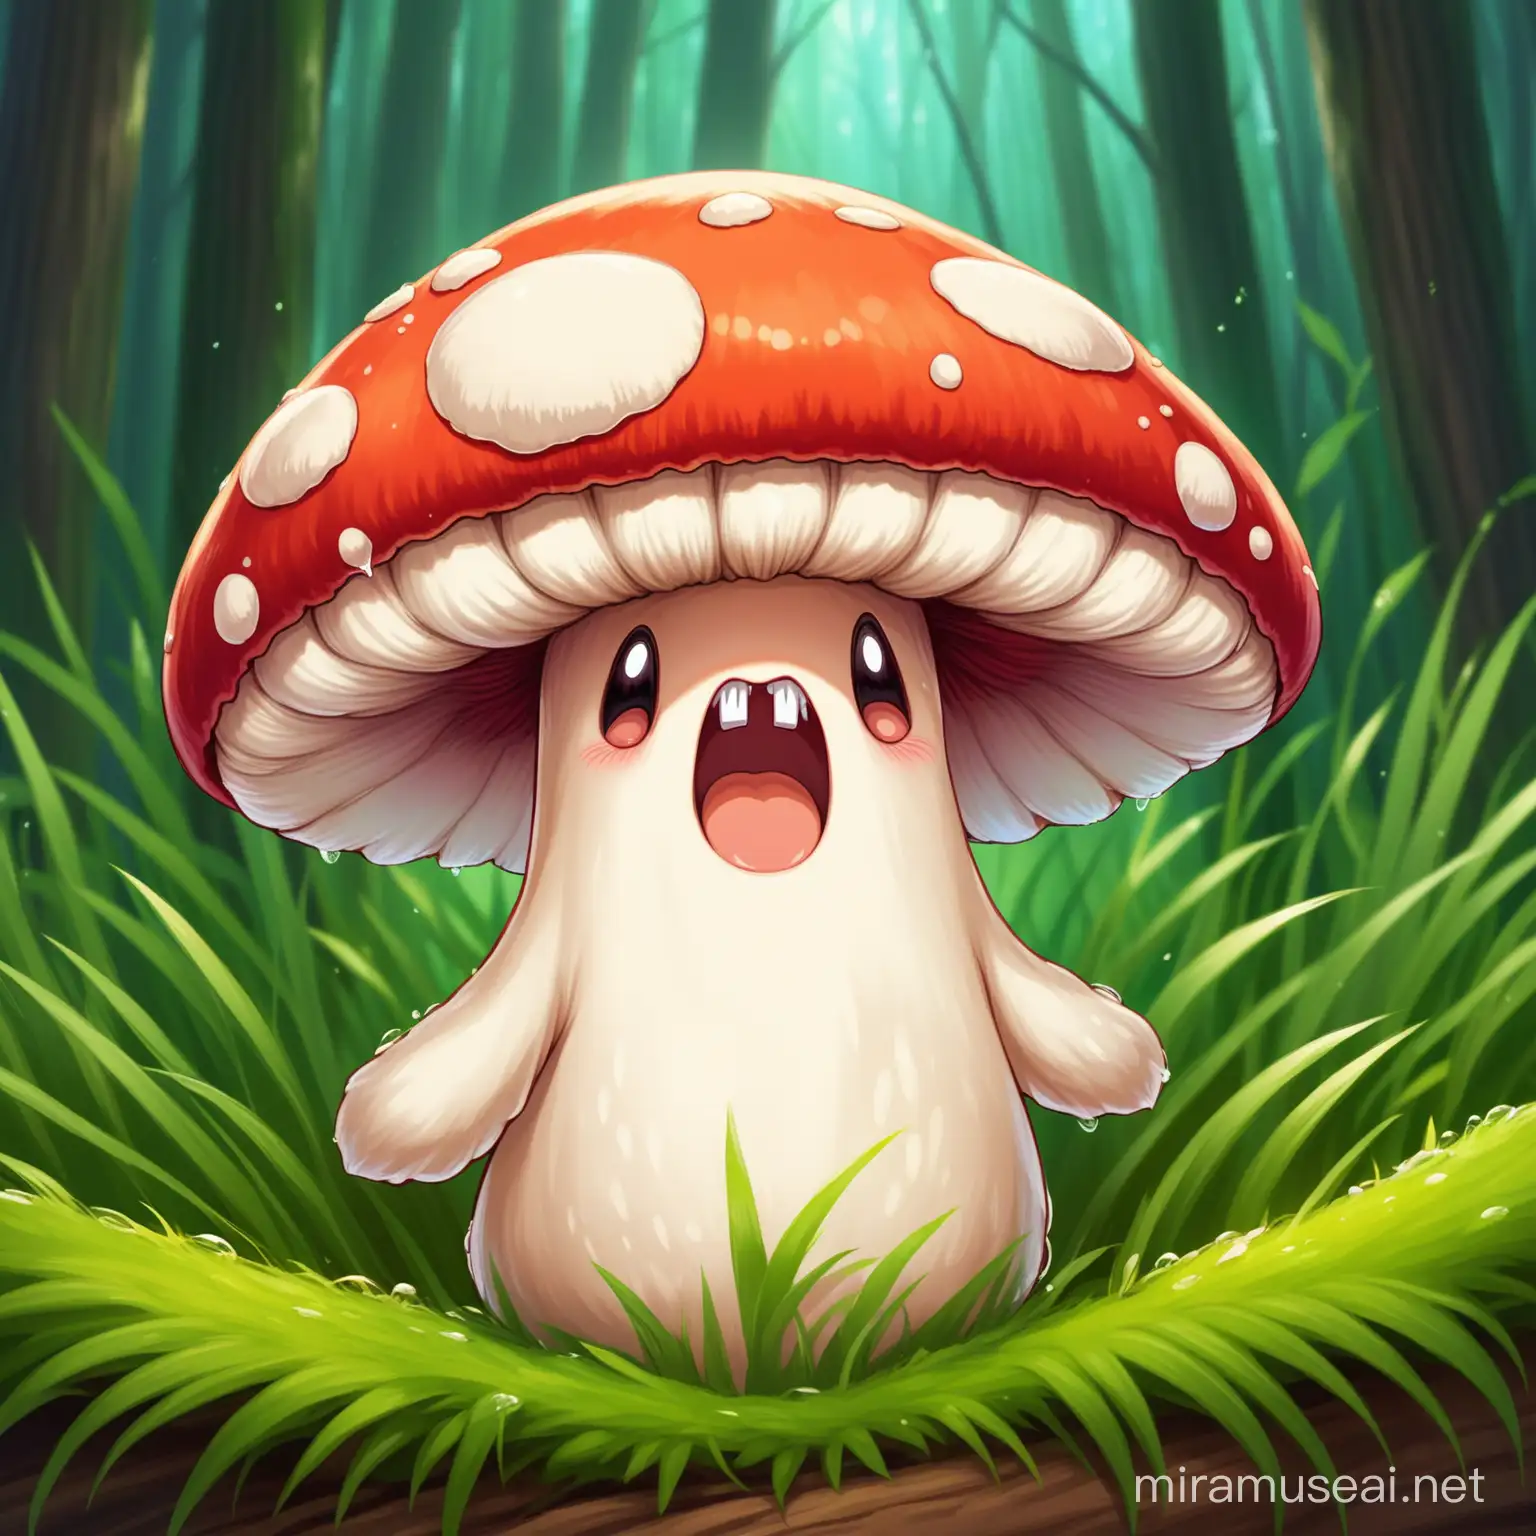 a screaming mushroom thats cute
